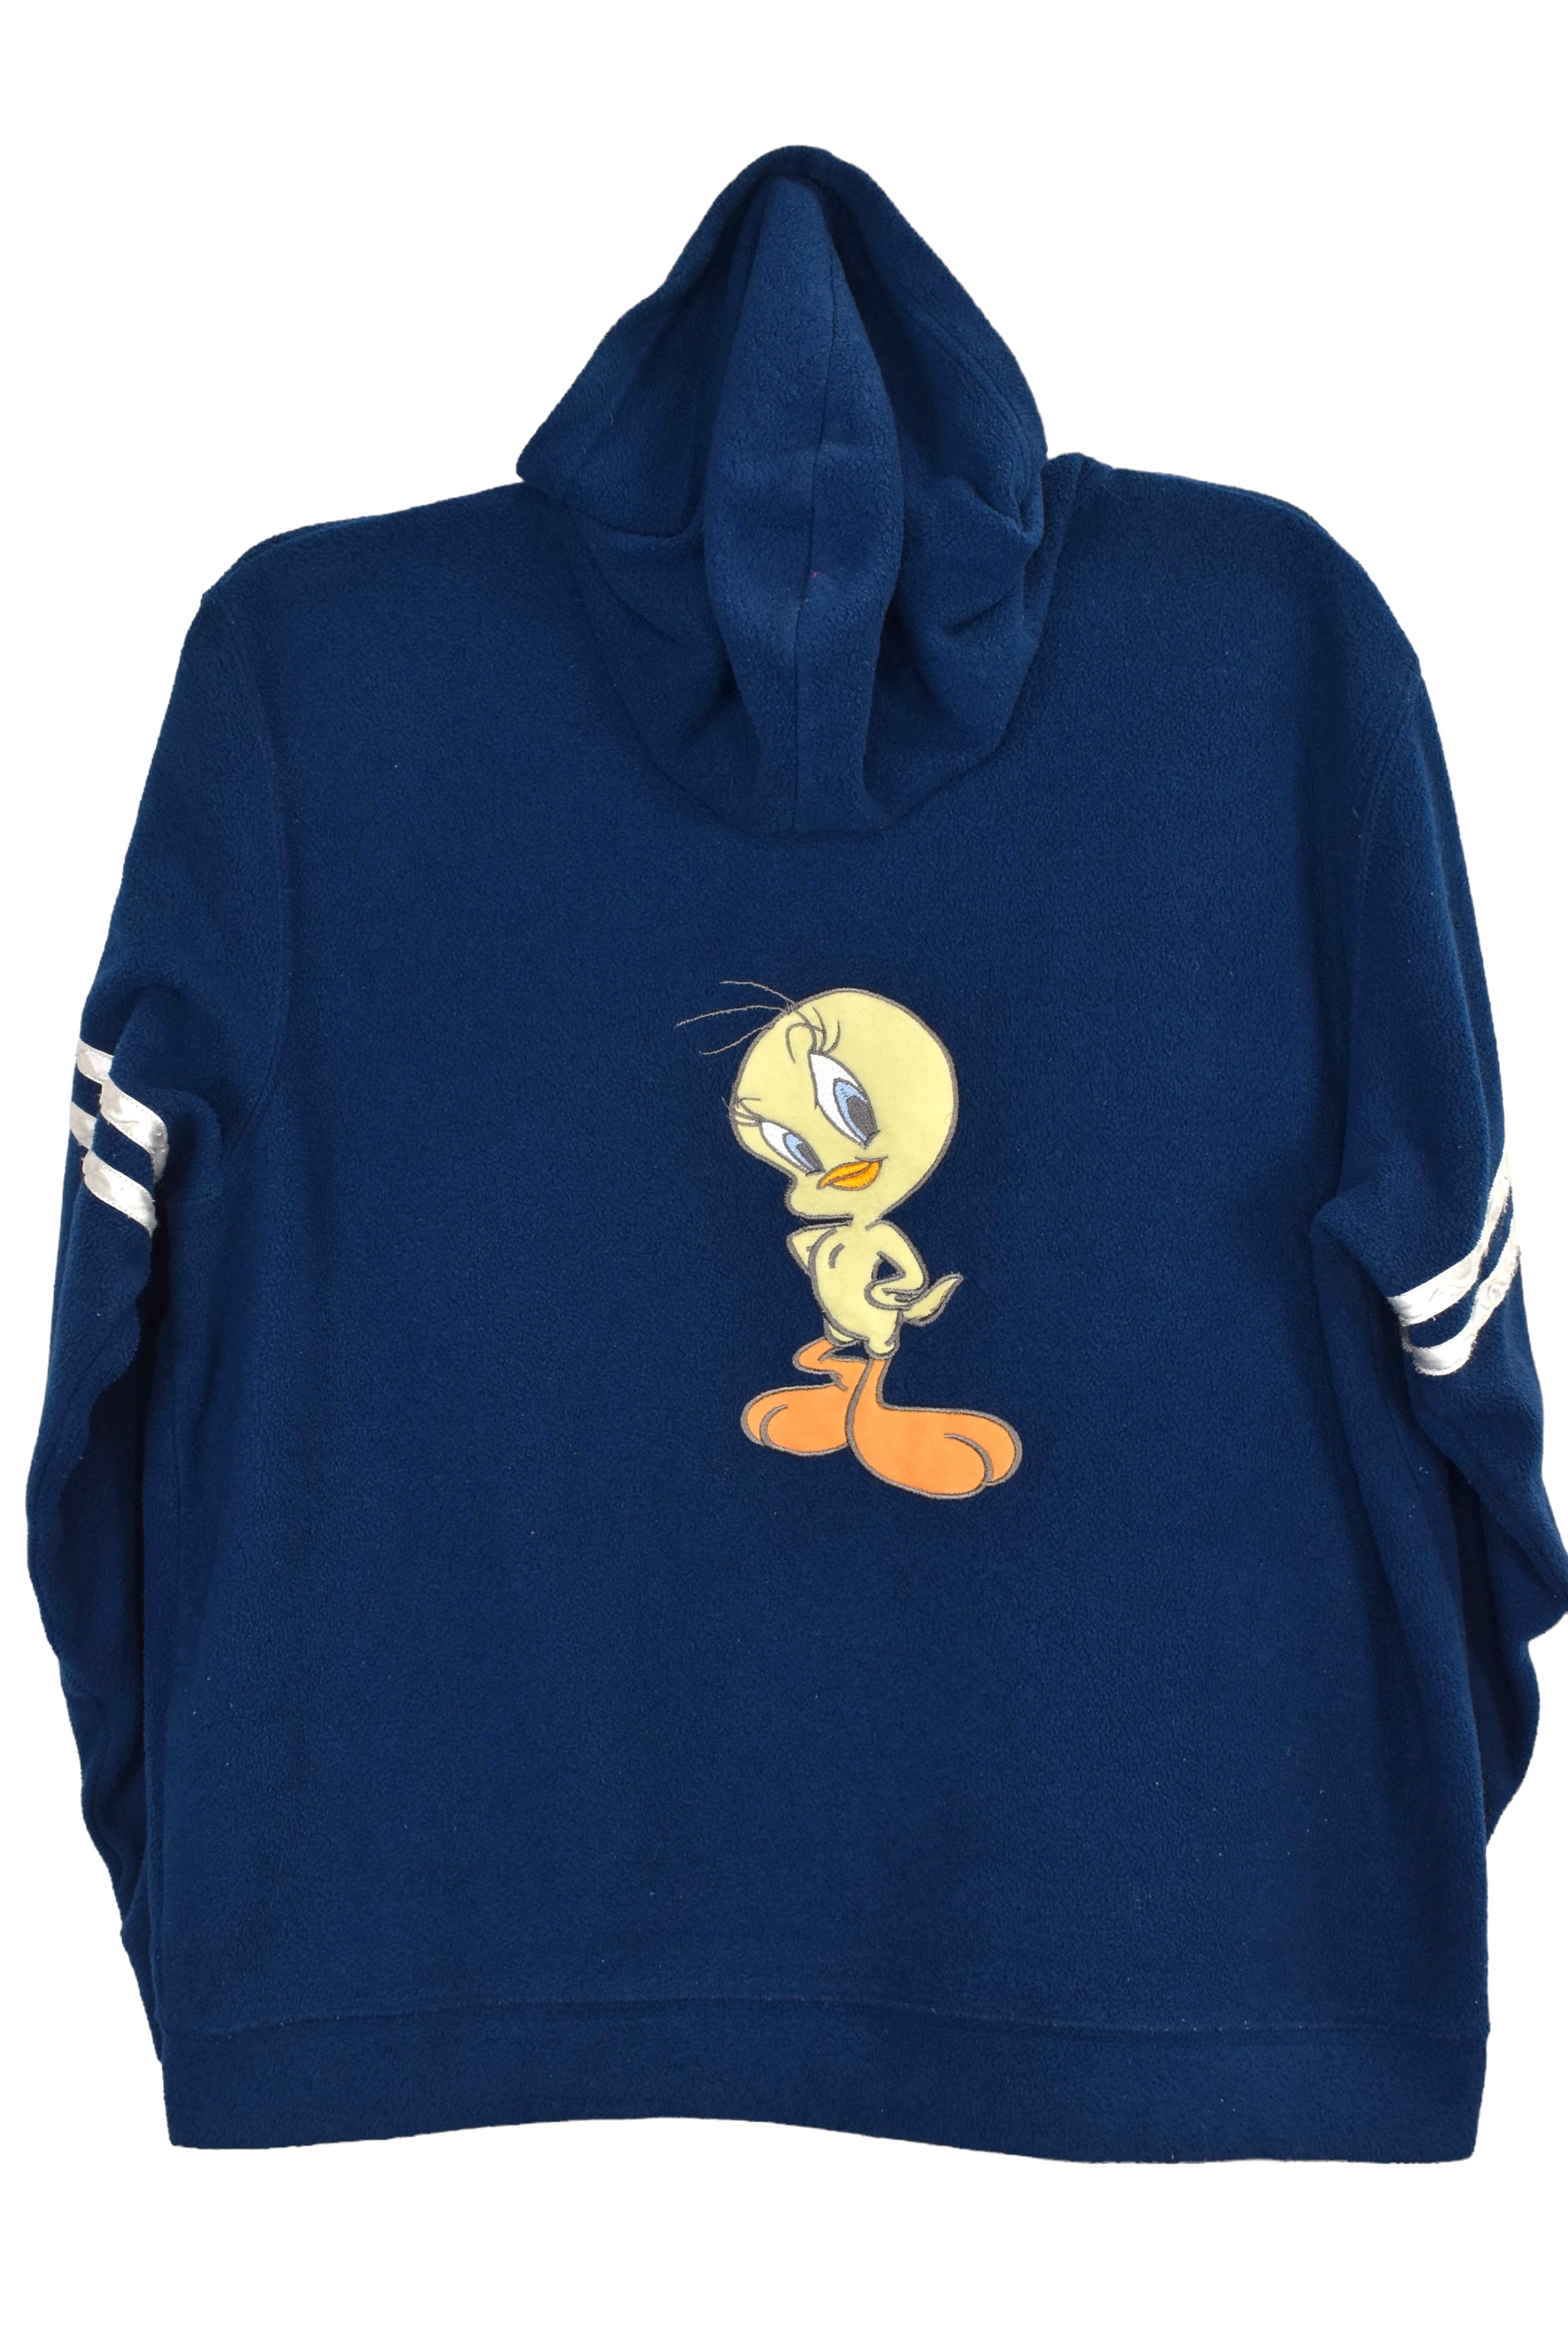 Women's vintage Tweety Bird hoodie (XL), navy embroidered fleece